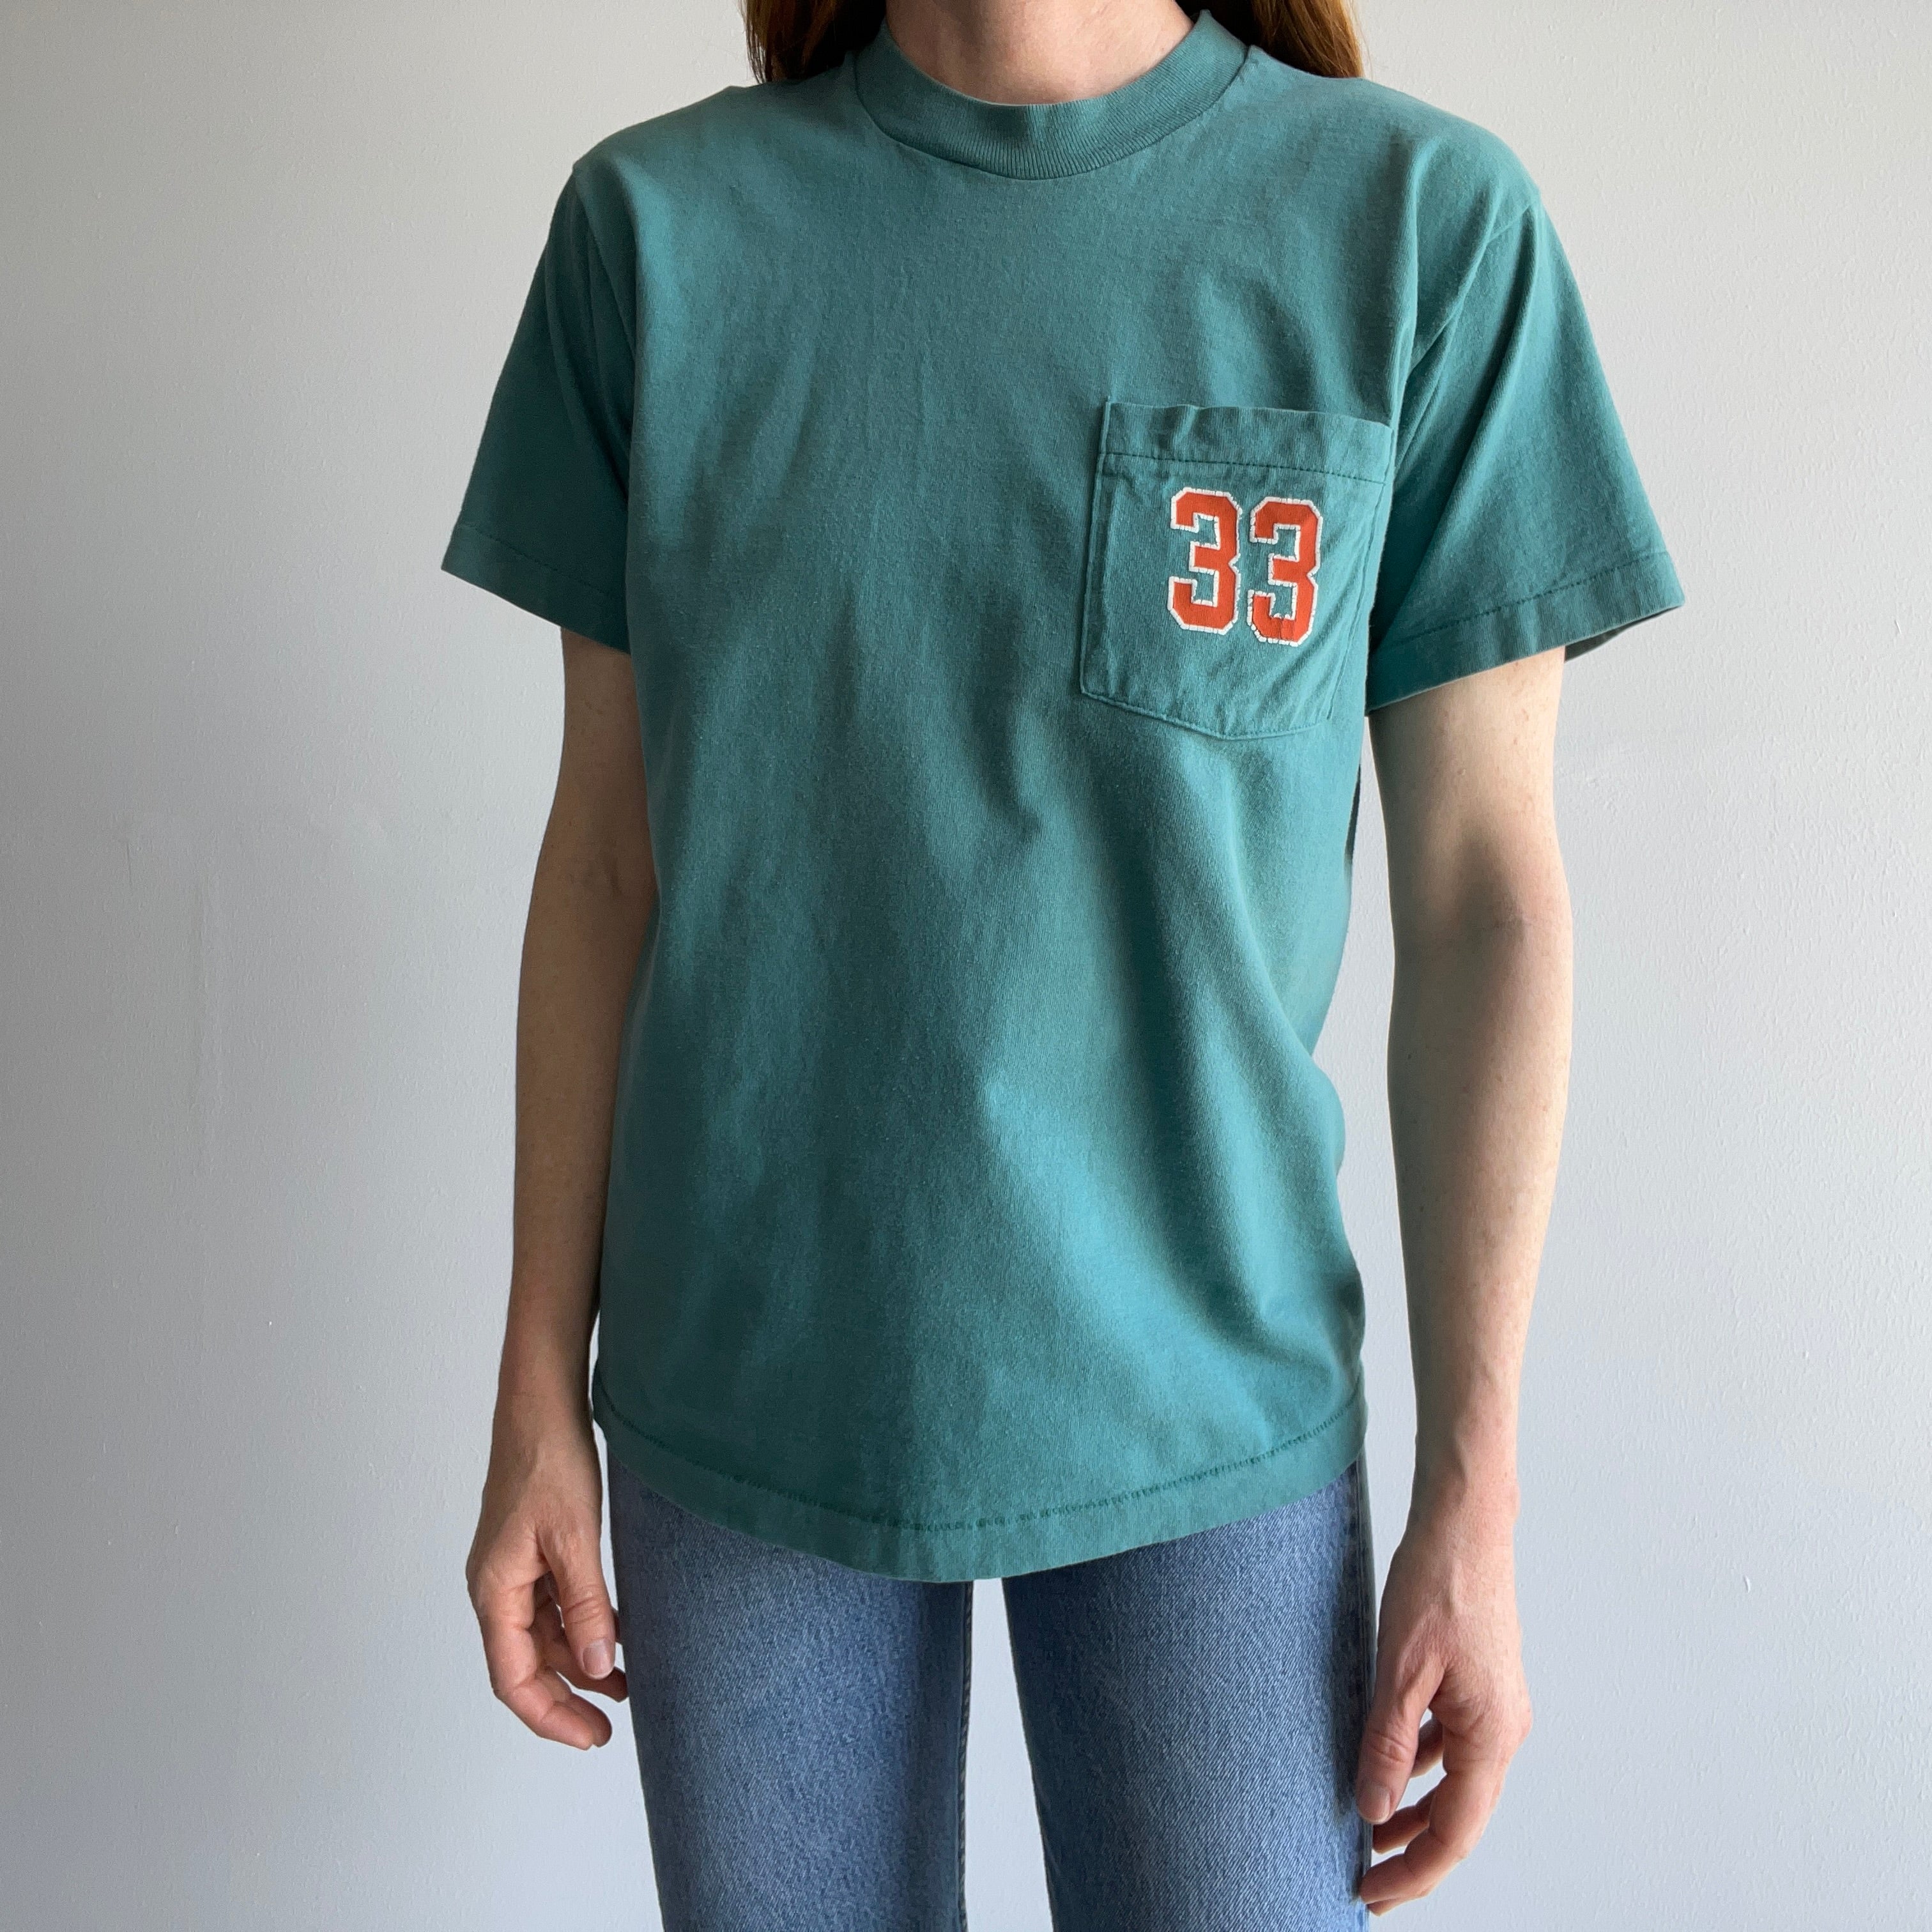 1980/90s No 33 Pocket T-Shirt - Miami Dolphins??